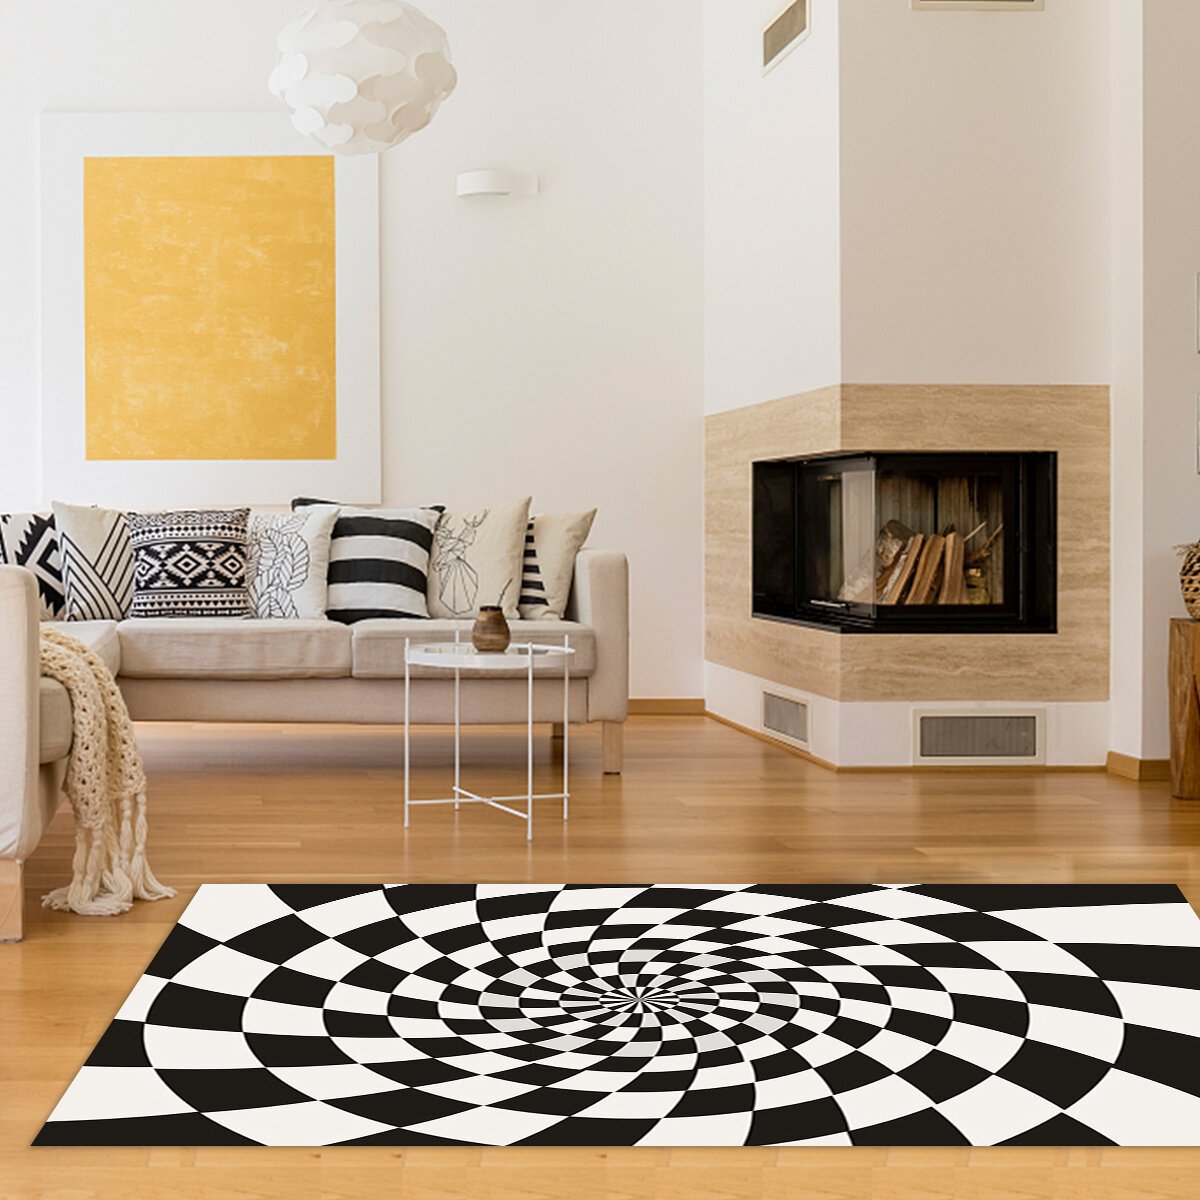 Checkered Optical Illusions Non Slip Area Rug, Durbale Anti-Slip Floor Mat Non-Woven Black White Doormat, for Living Dinning Room Bedroom Kitchen